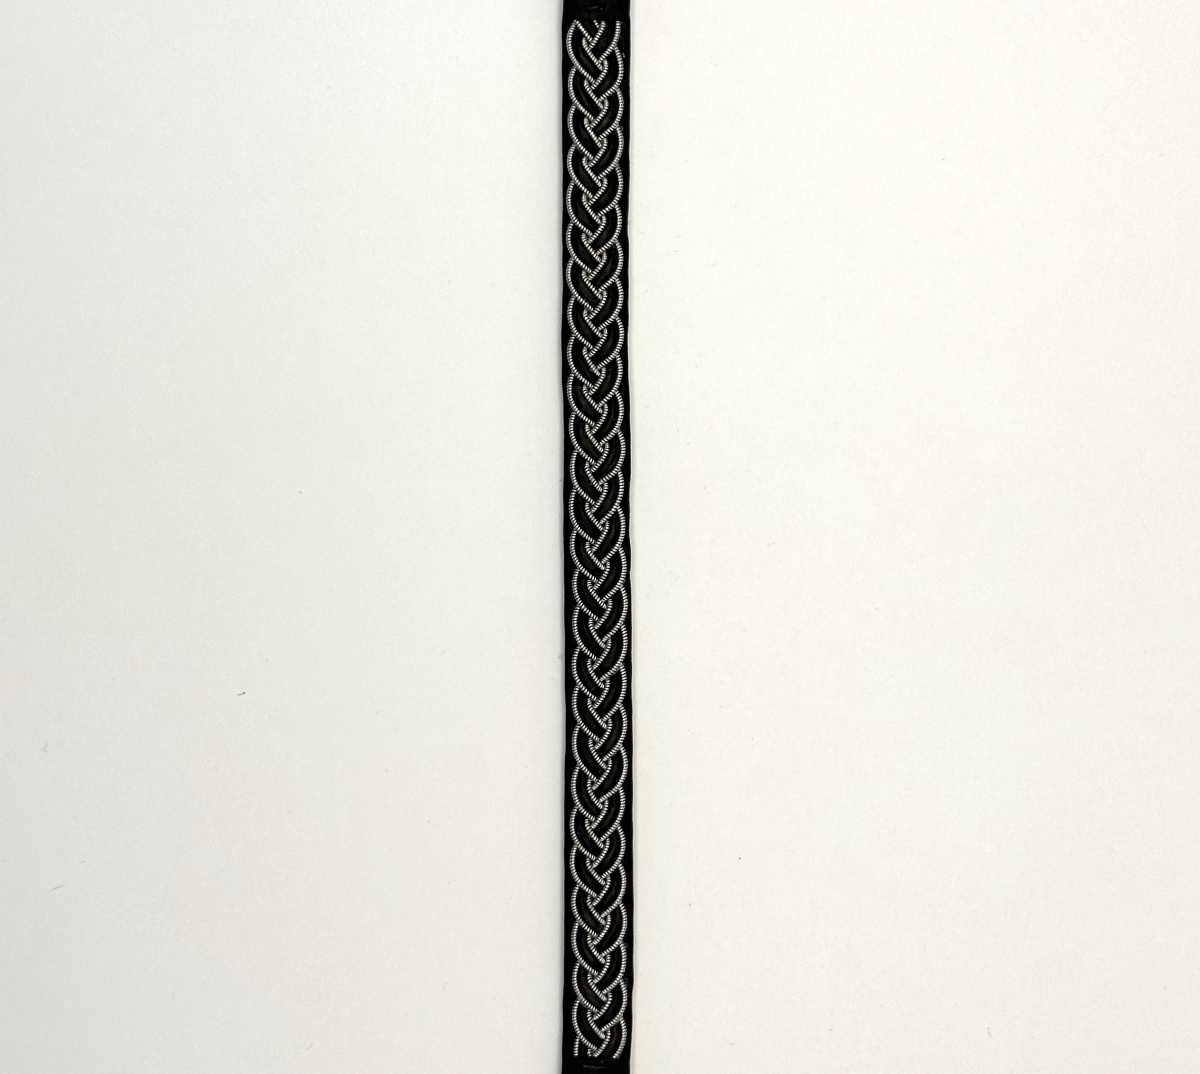 Frontansicht des Artikels saami crafts Armband AL041